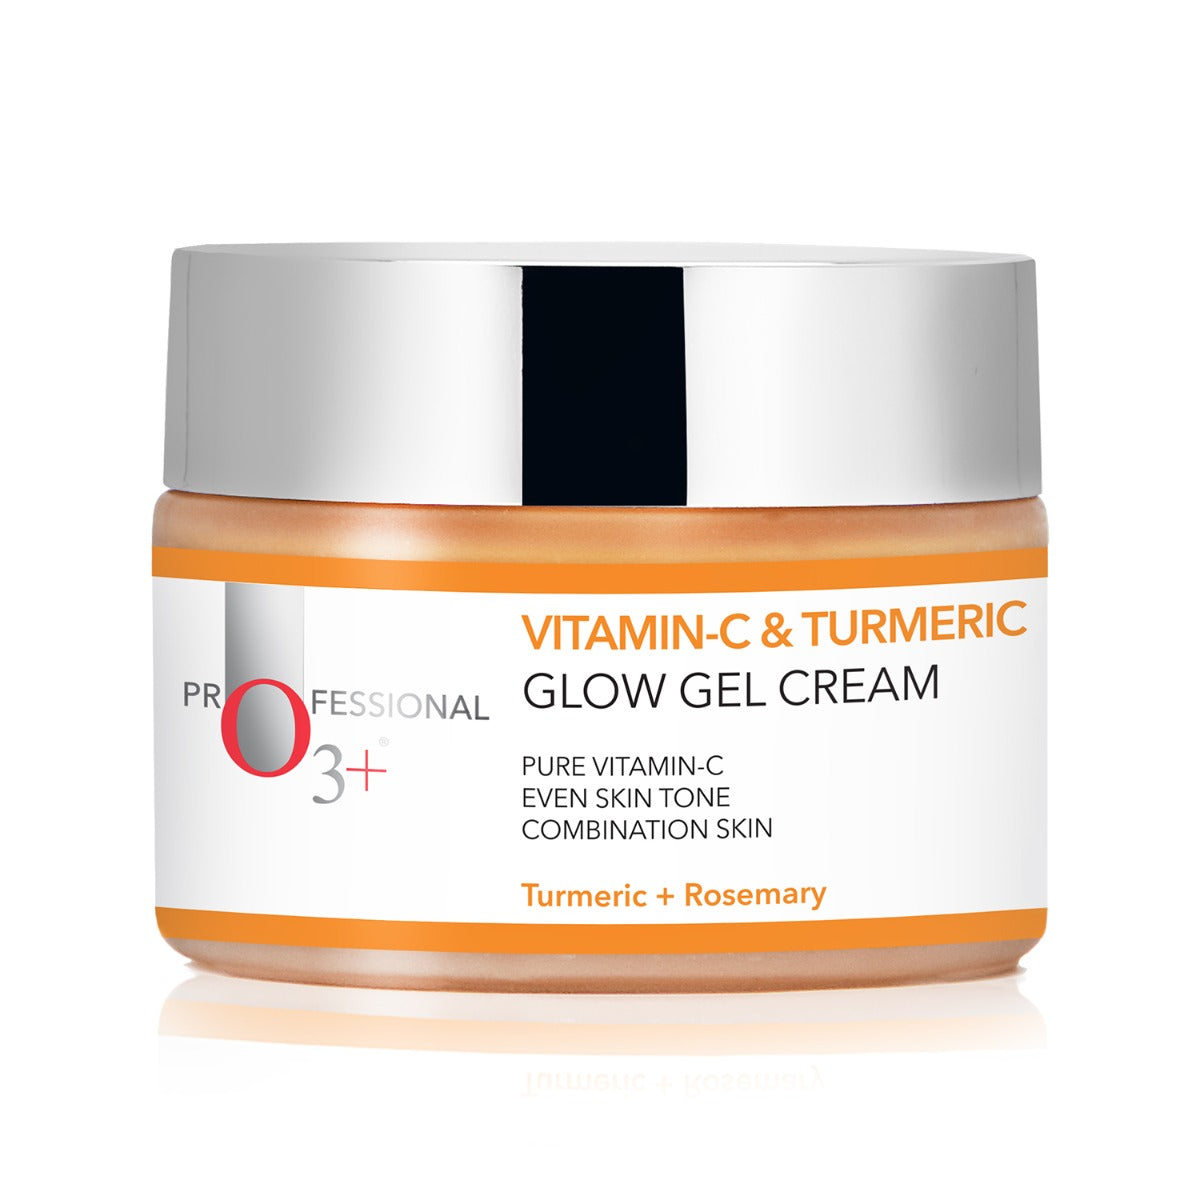 Vitamin- C & Turmeric Glow Gel Cream for Dark Spots & Acne Scars (50g)